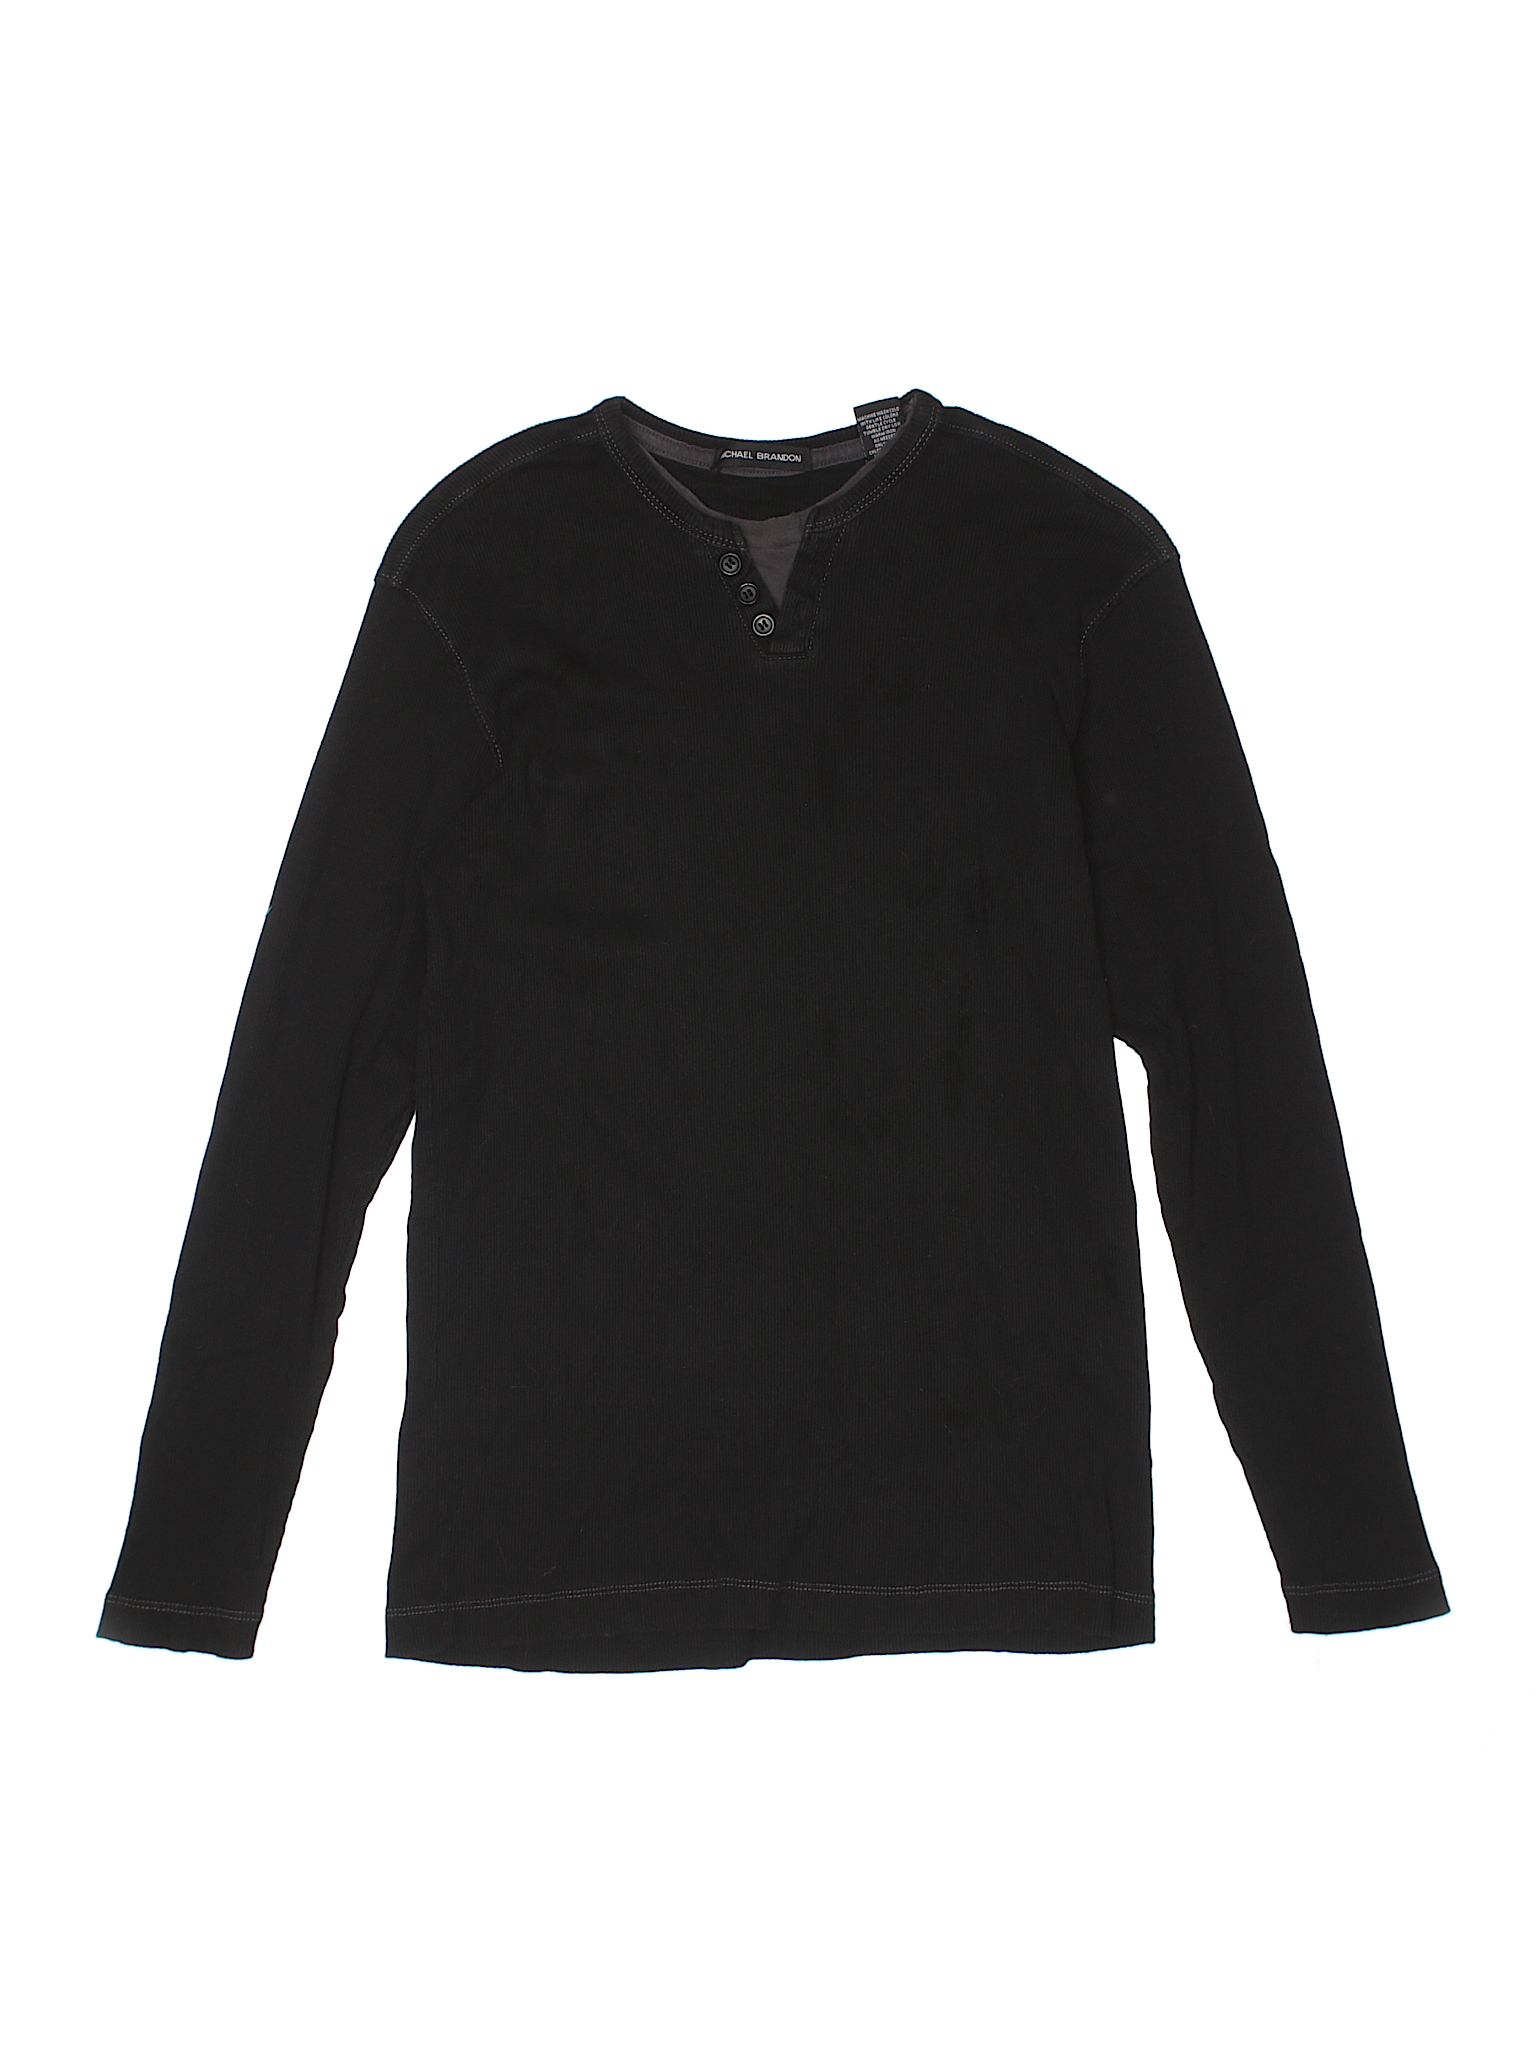 Michael Brandon 100% Cotton Solid Black Long Sleeve Henley Size S - 86% off